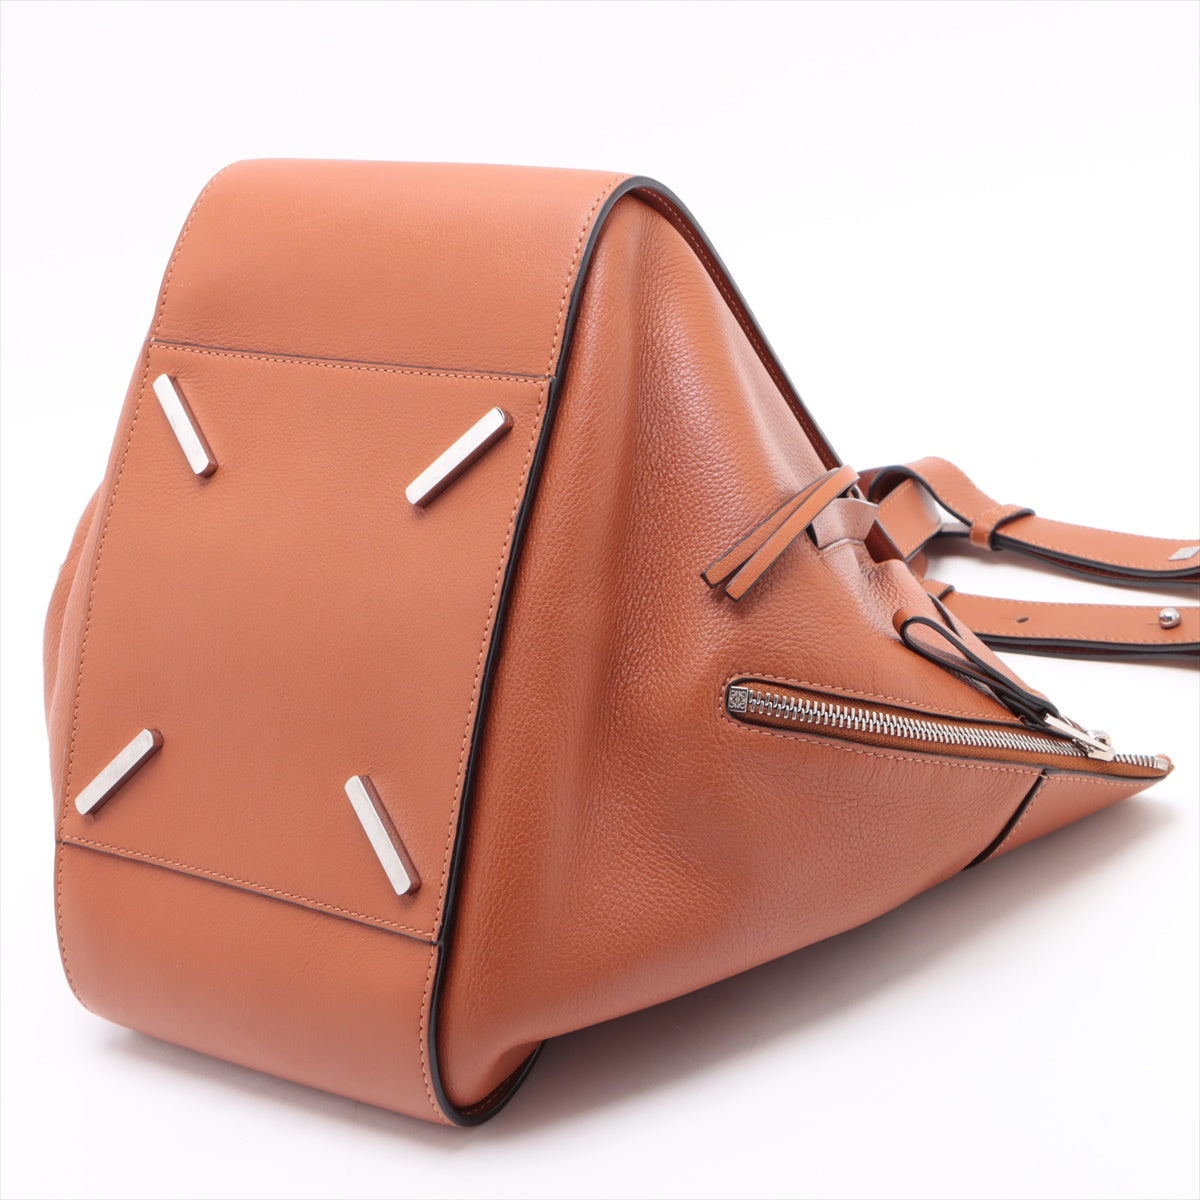 Loewe Hammock Medium Leather 2way handbag Brown